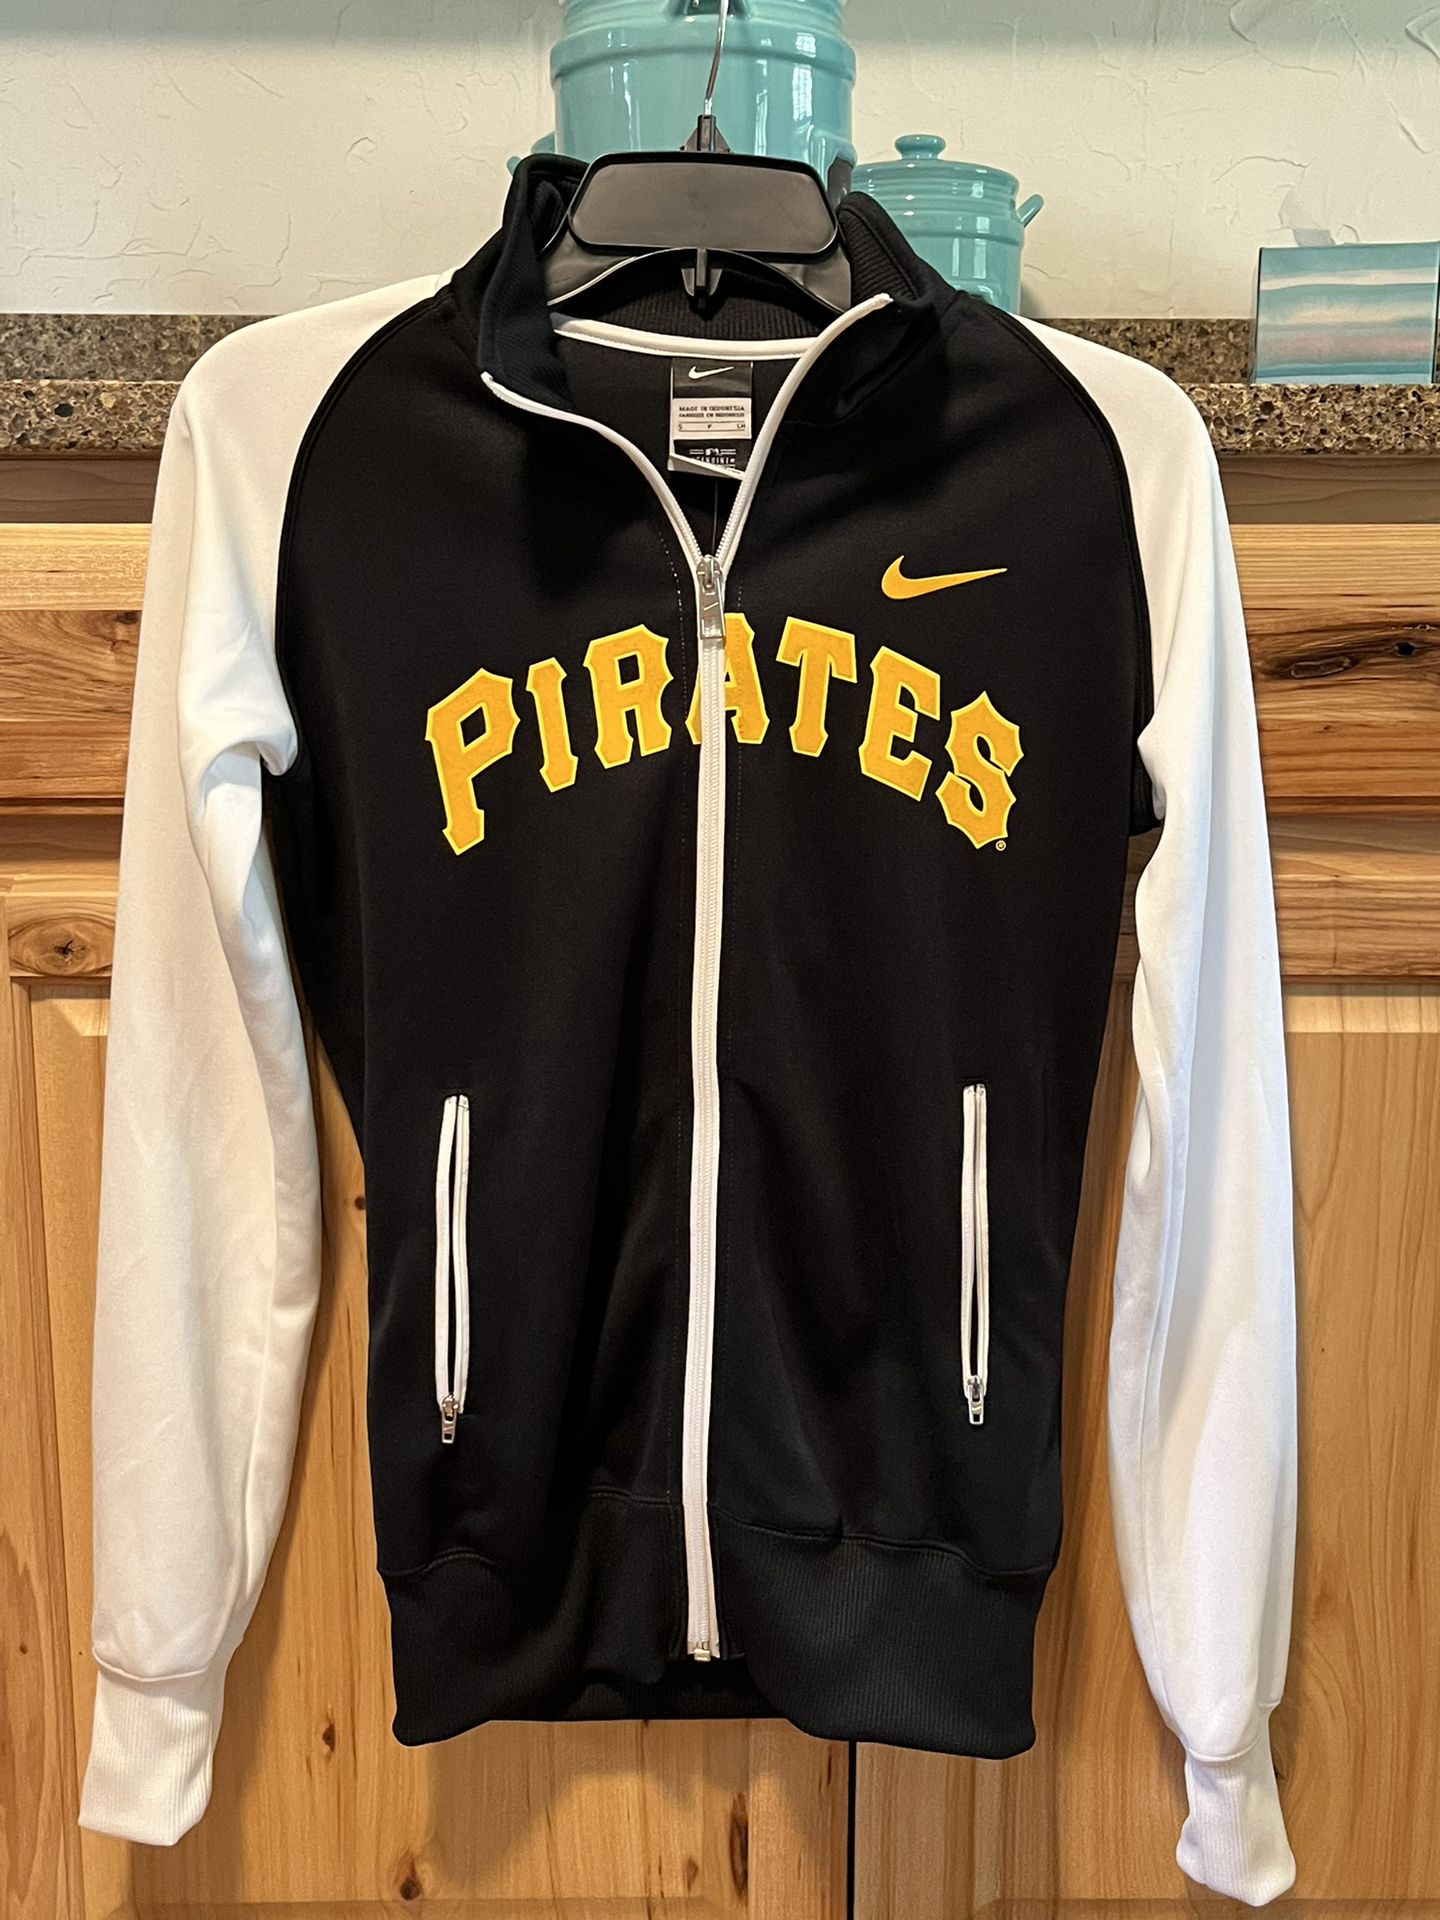 Women's Pirates Nike track jacket